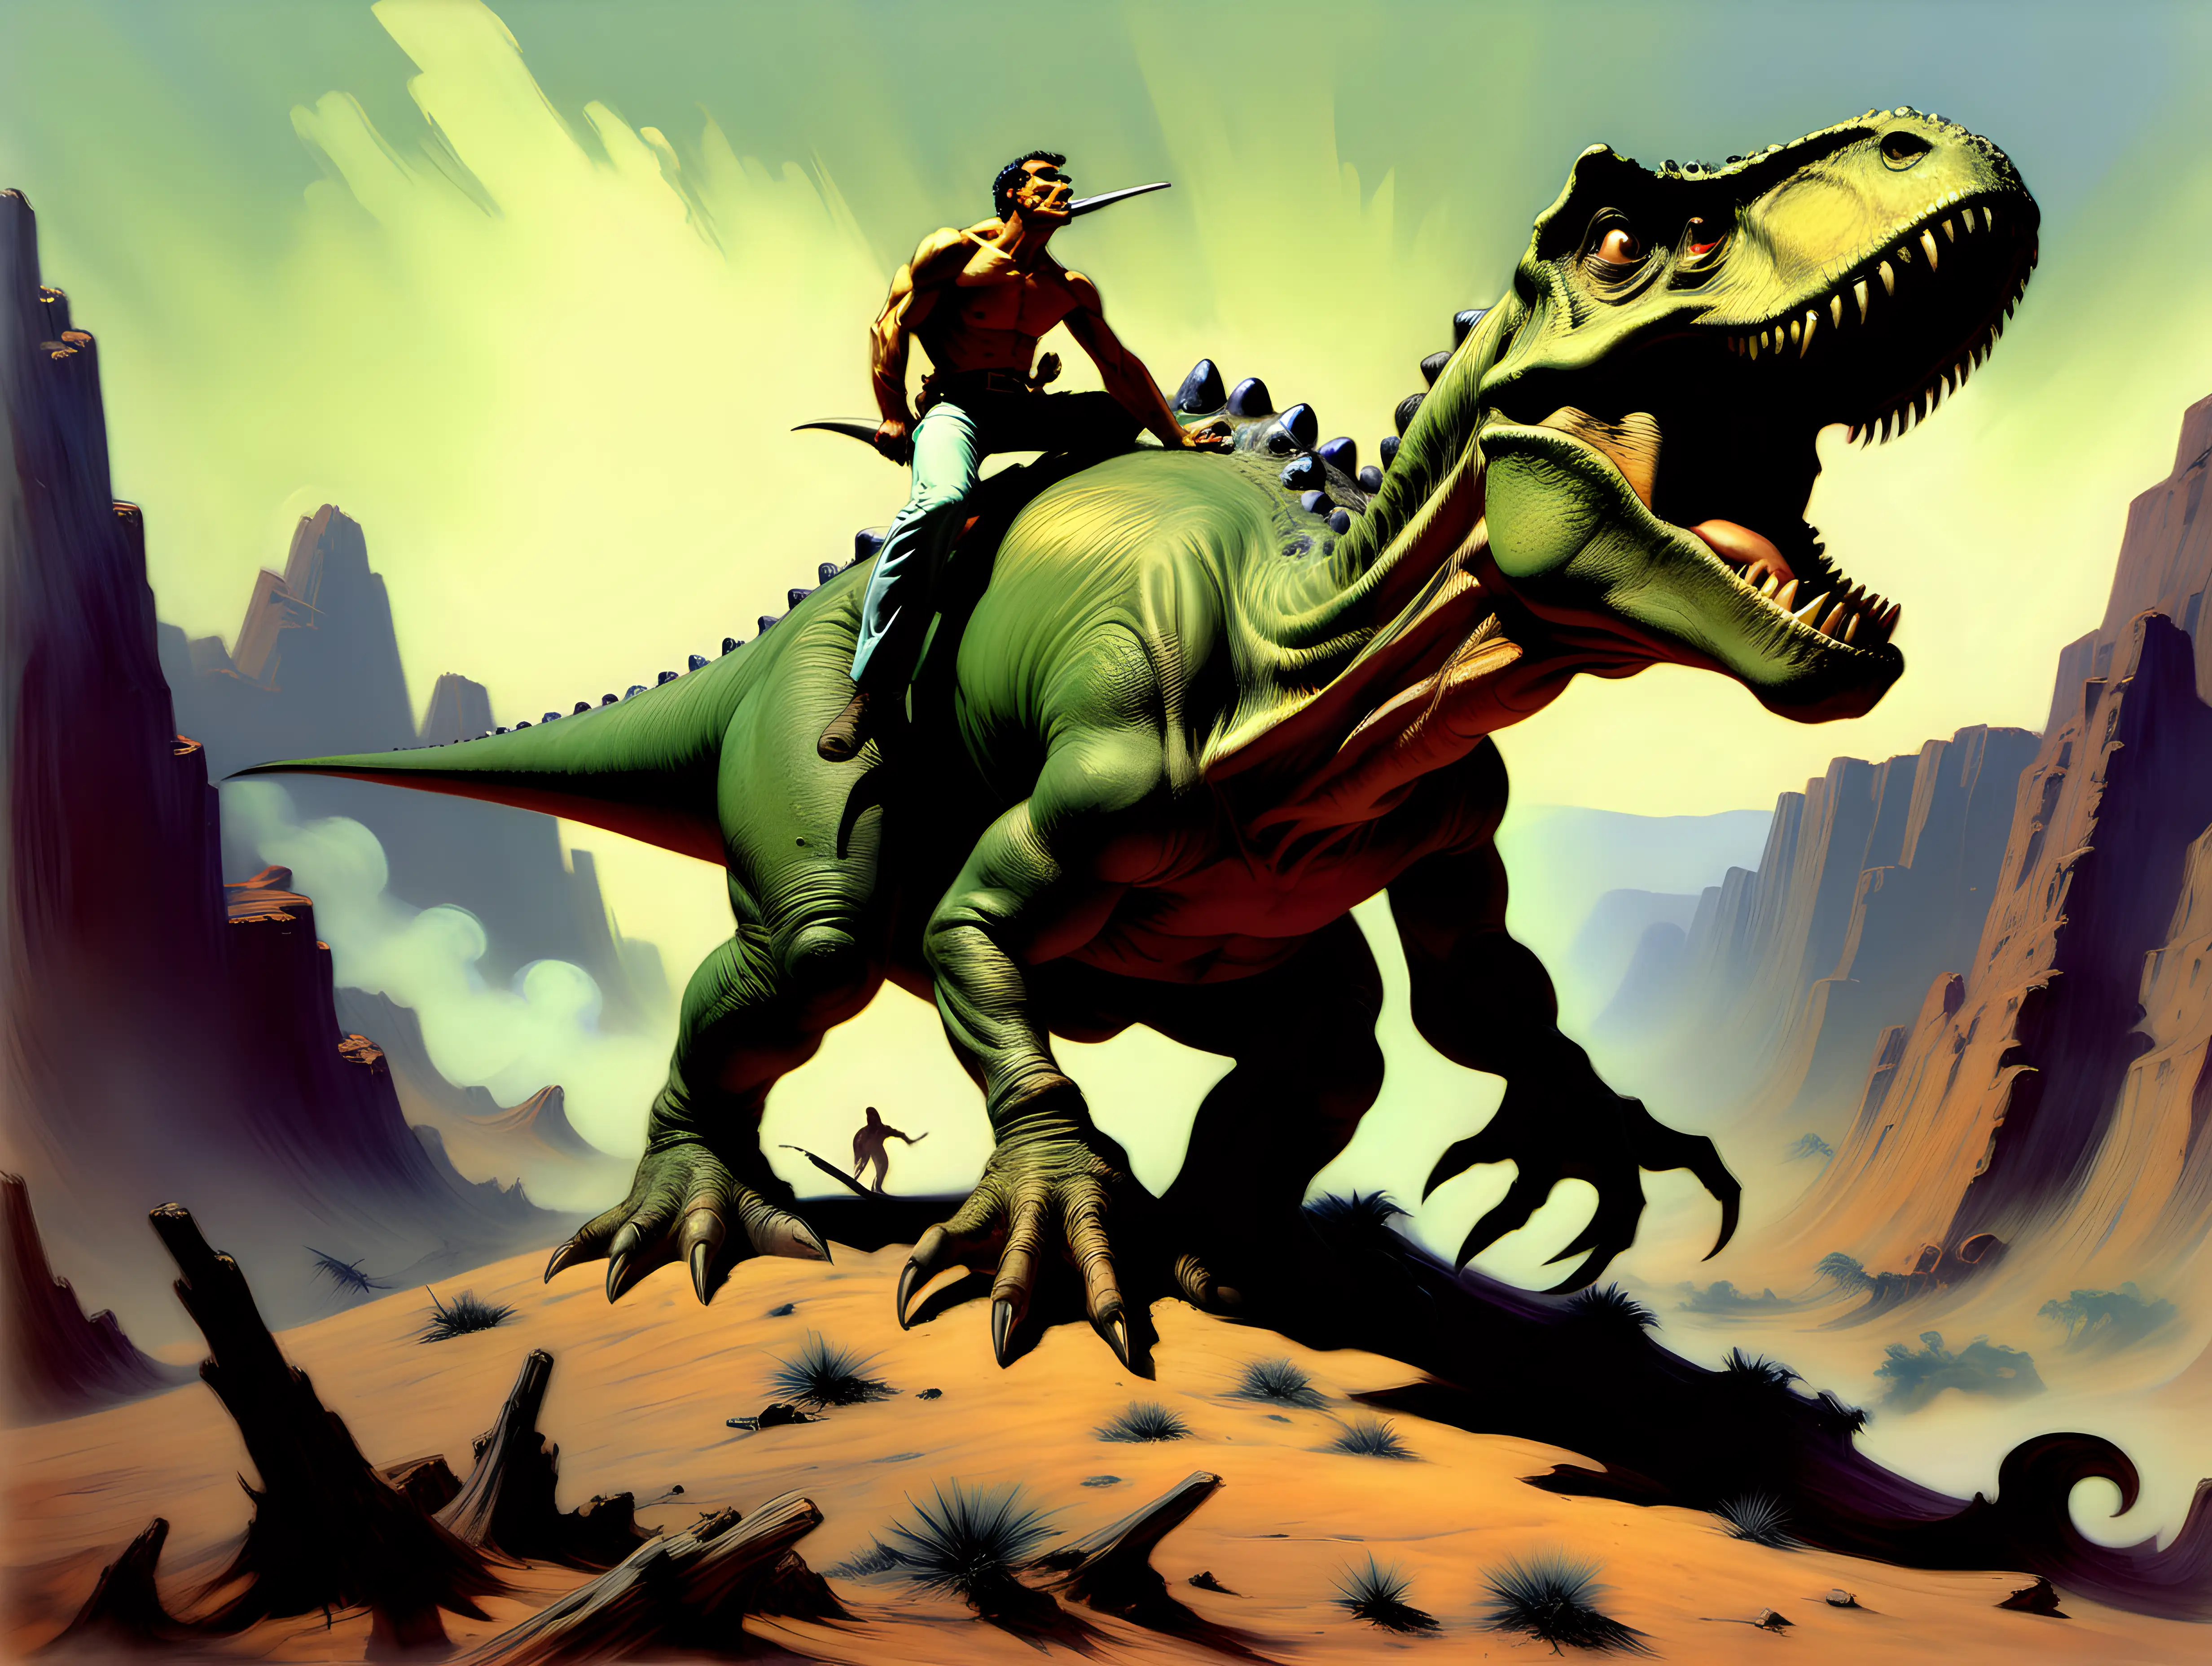 Adventurous Warrior Riding Dinosaur Through Treacherous Valley Frank Frazetta Inspired Art